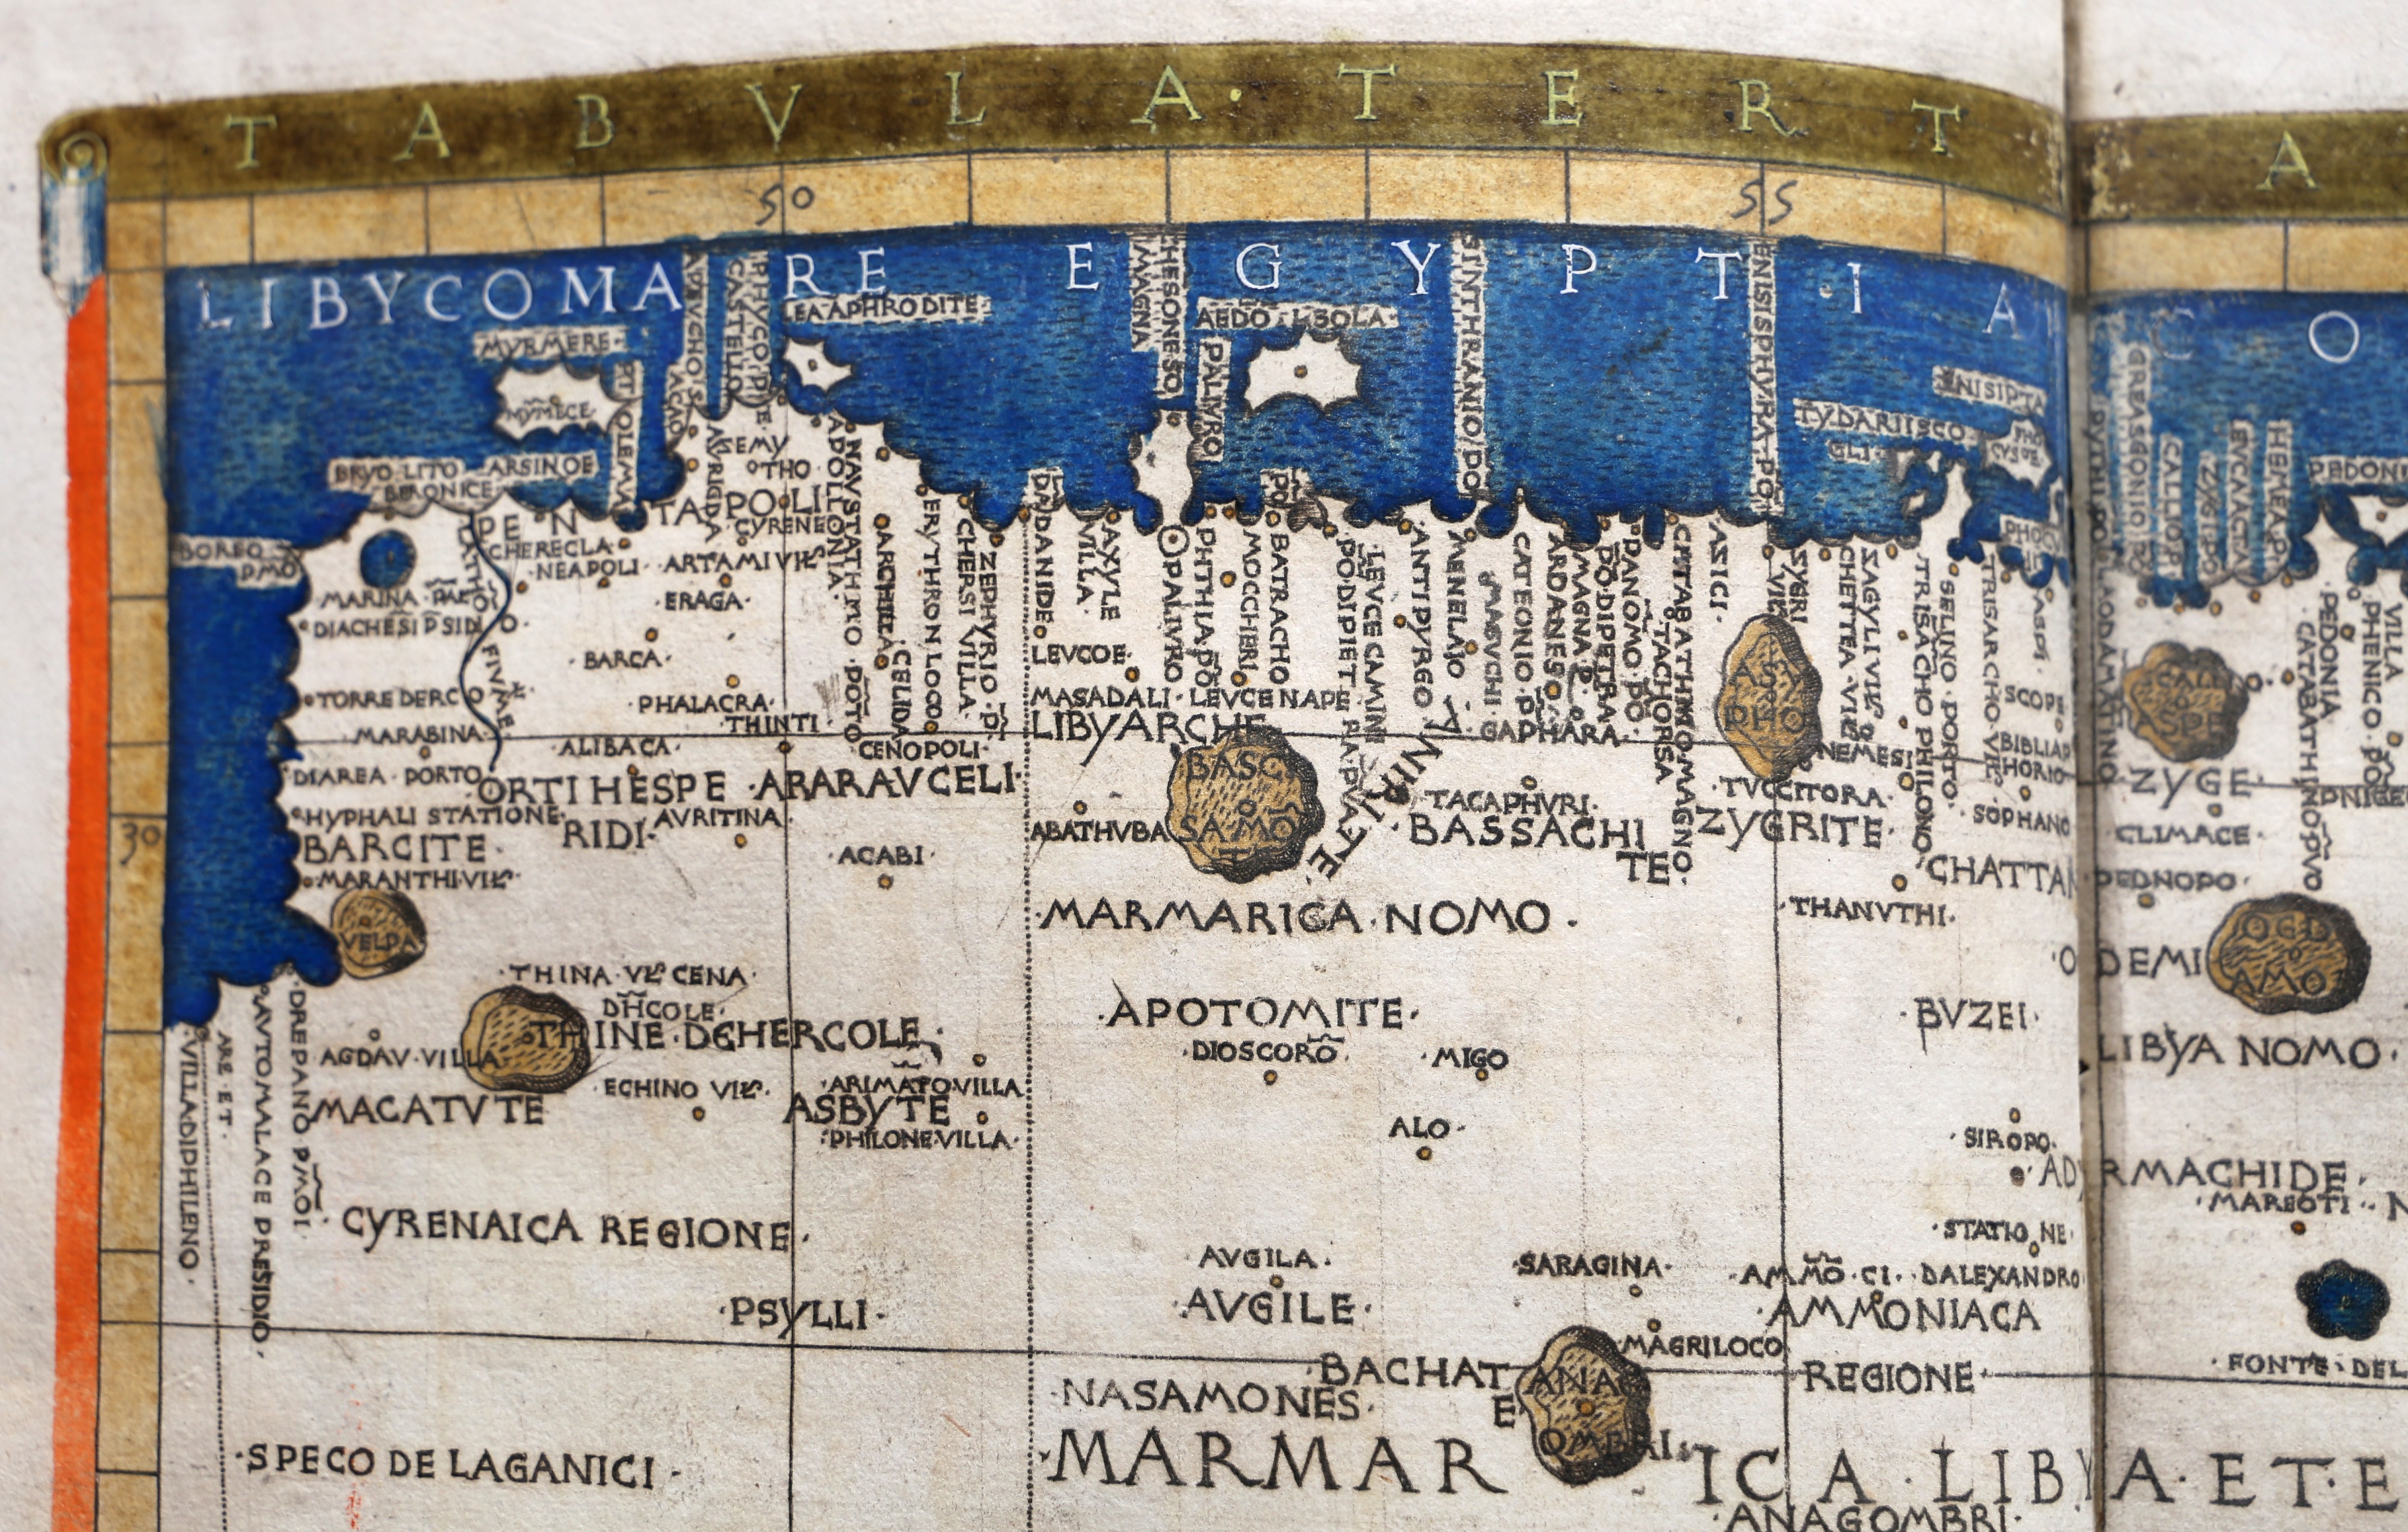 Francesco Berlinghieri, Geographia, incunabolo per niccolò di lorenzo, firenze 1482, 24 egitto 02